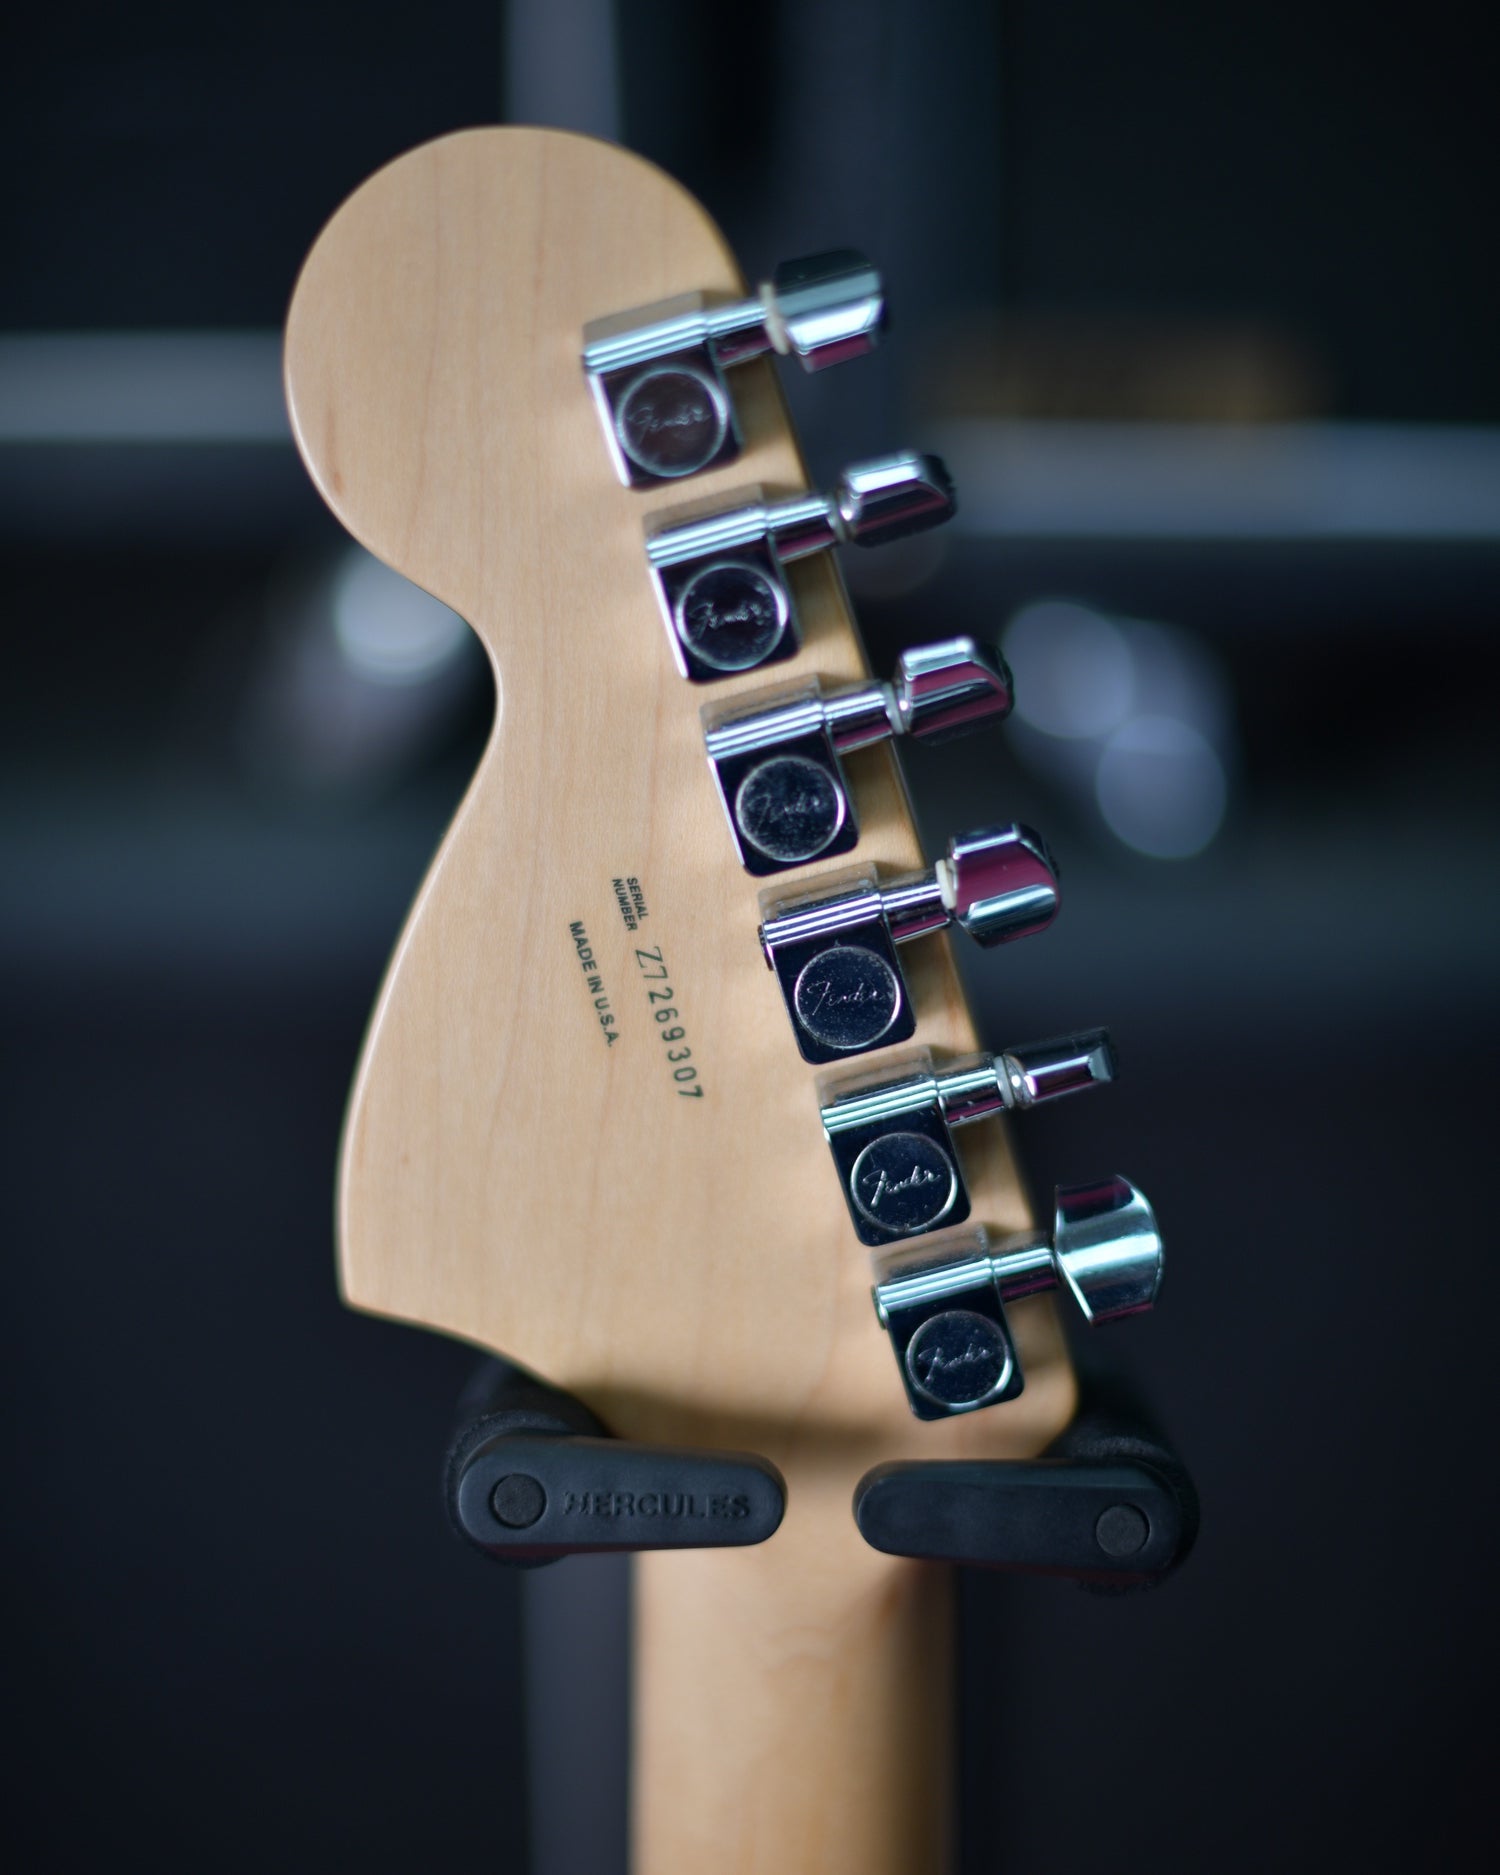 Fender USA Highway One Stratocaster Honey Blonde 2007